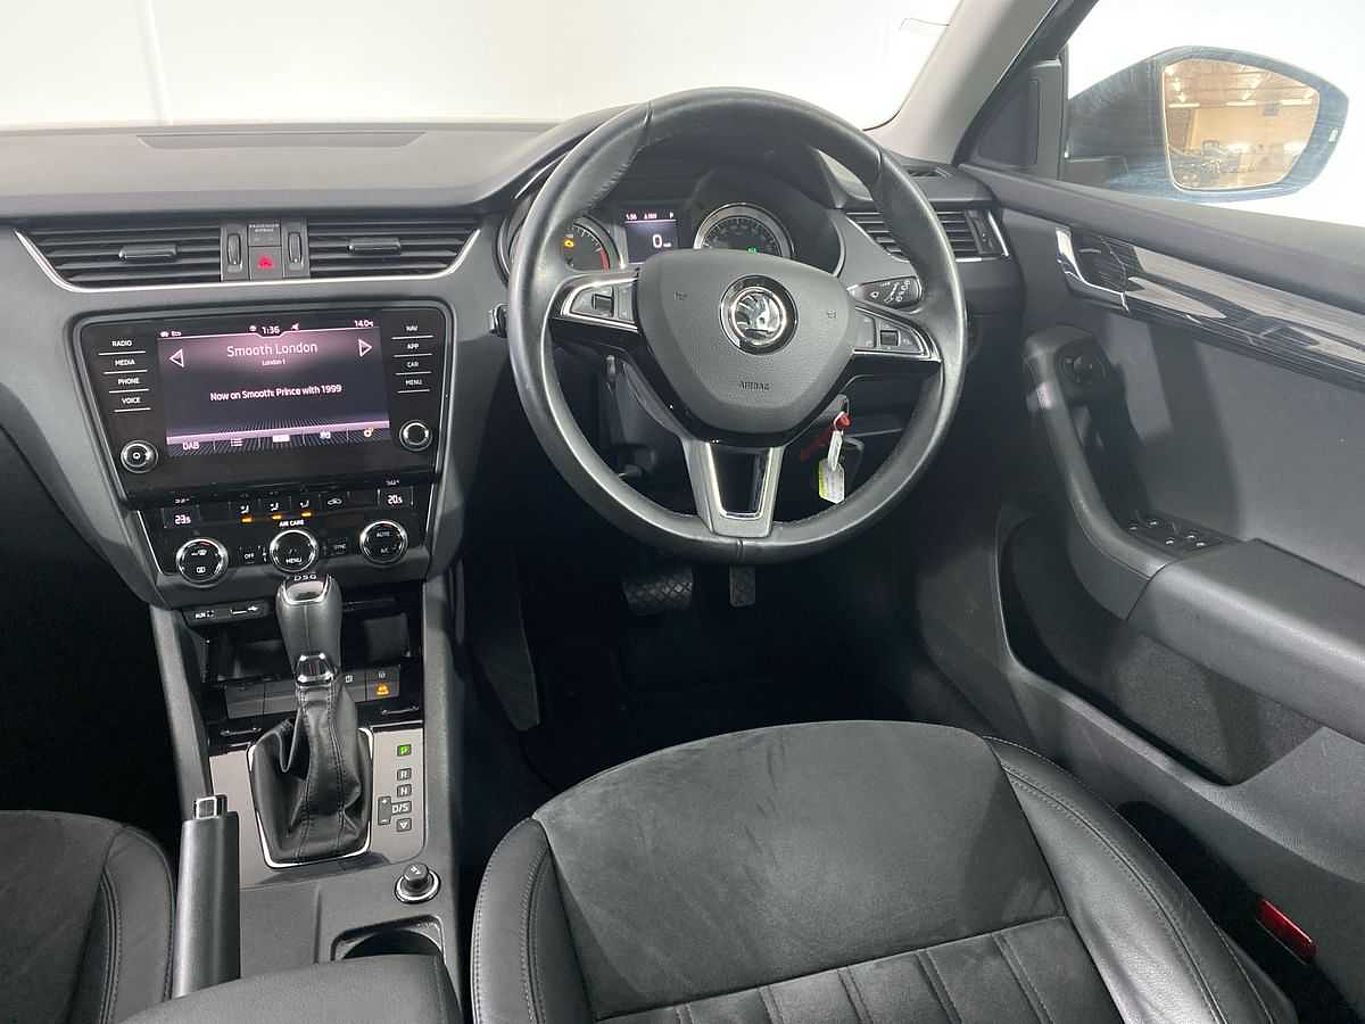 SKODA Octavia Hatchback (2017) 1.4 TSI SE L (150PS) DSG